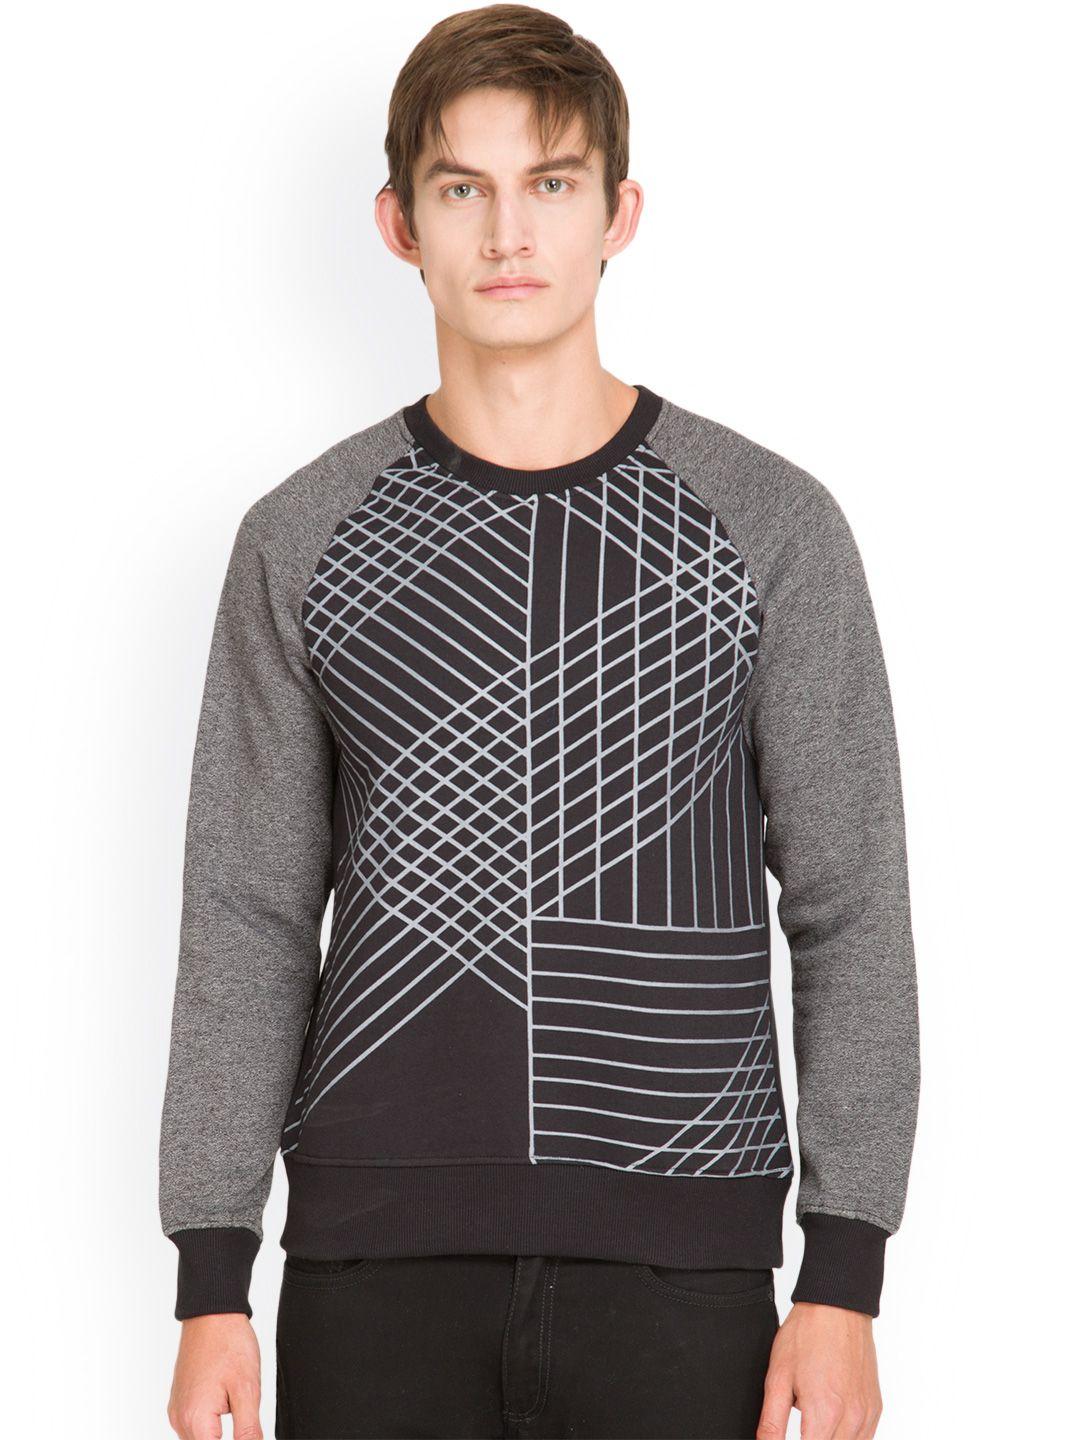 locomotive black & grey printed sweatshirt